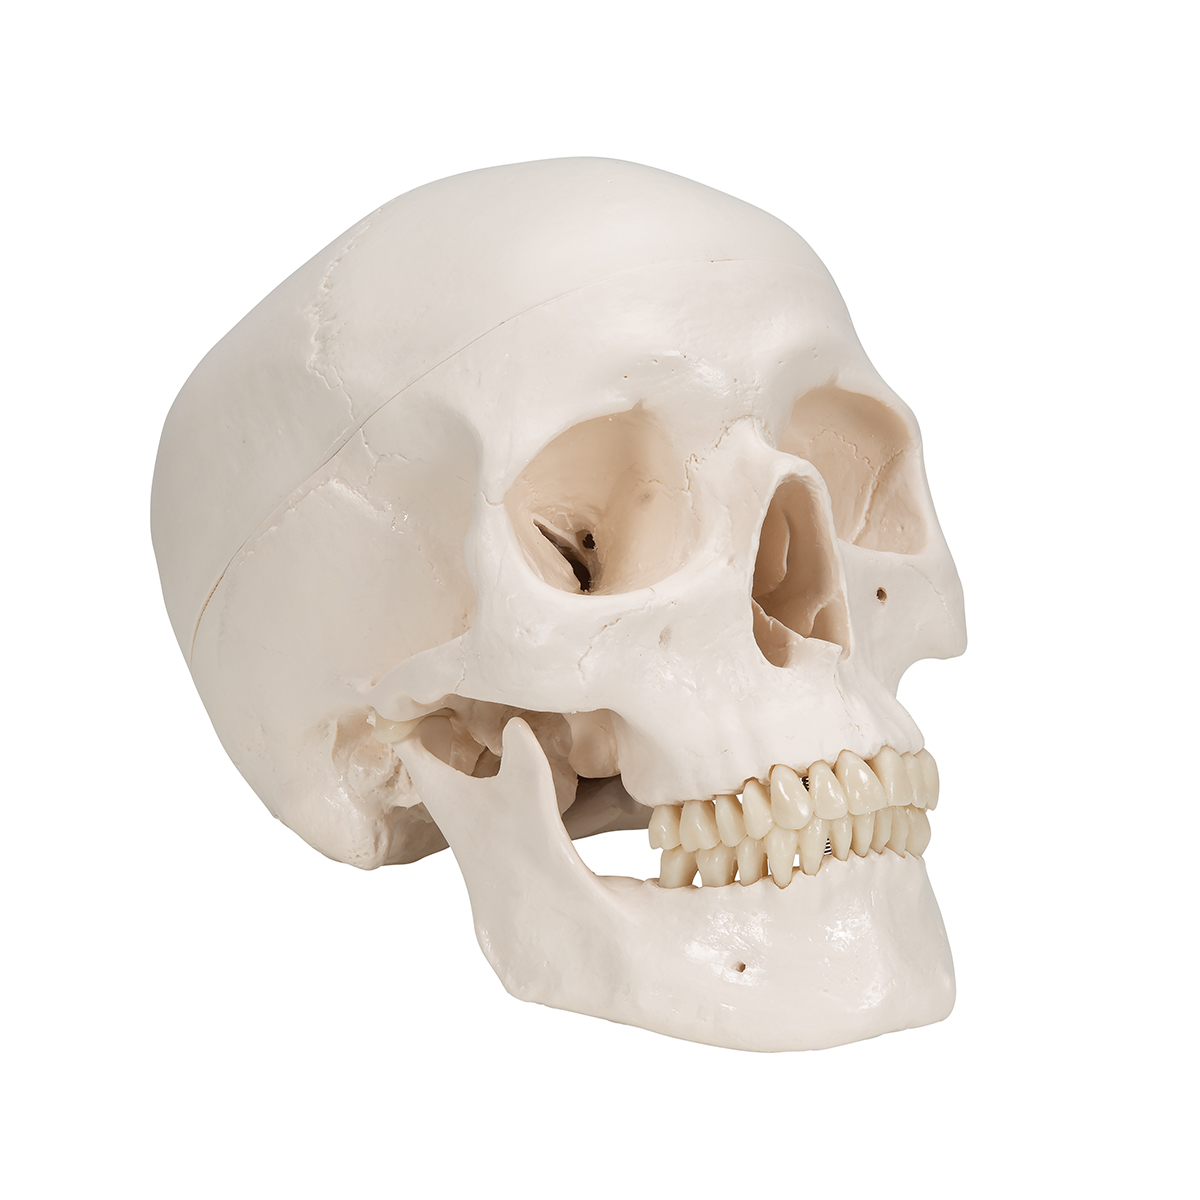 Human Skull Model | Plastic Skull Model | Classic Human Skull Model